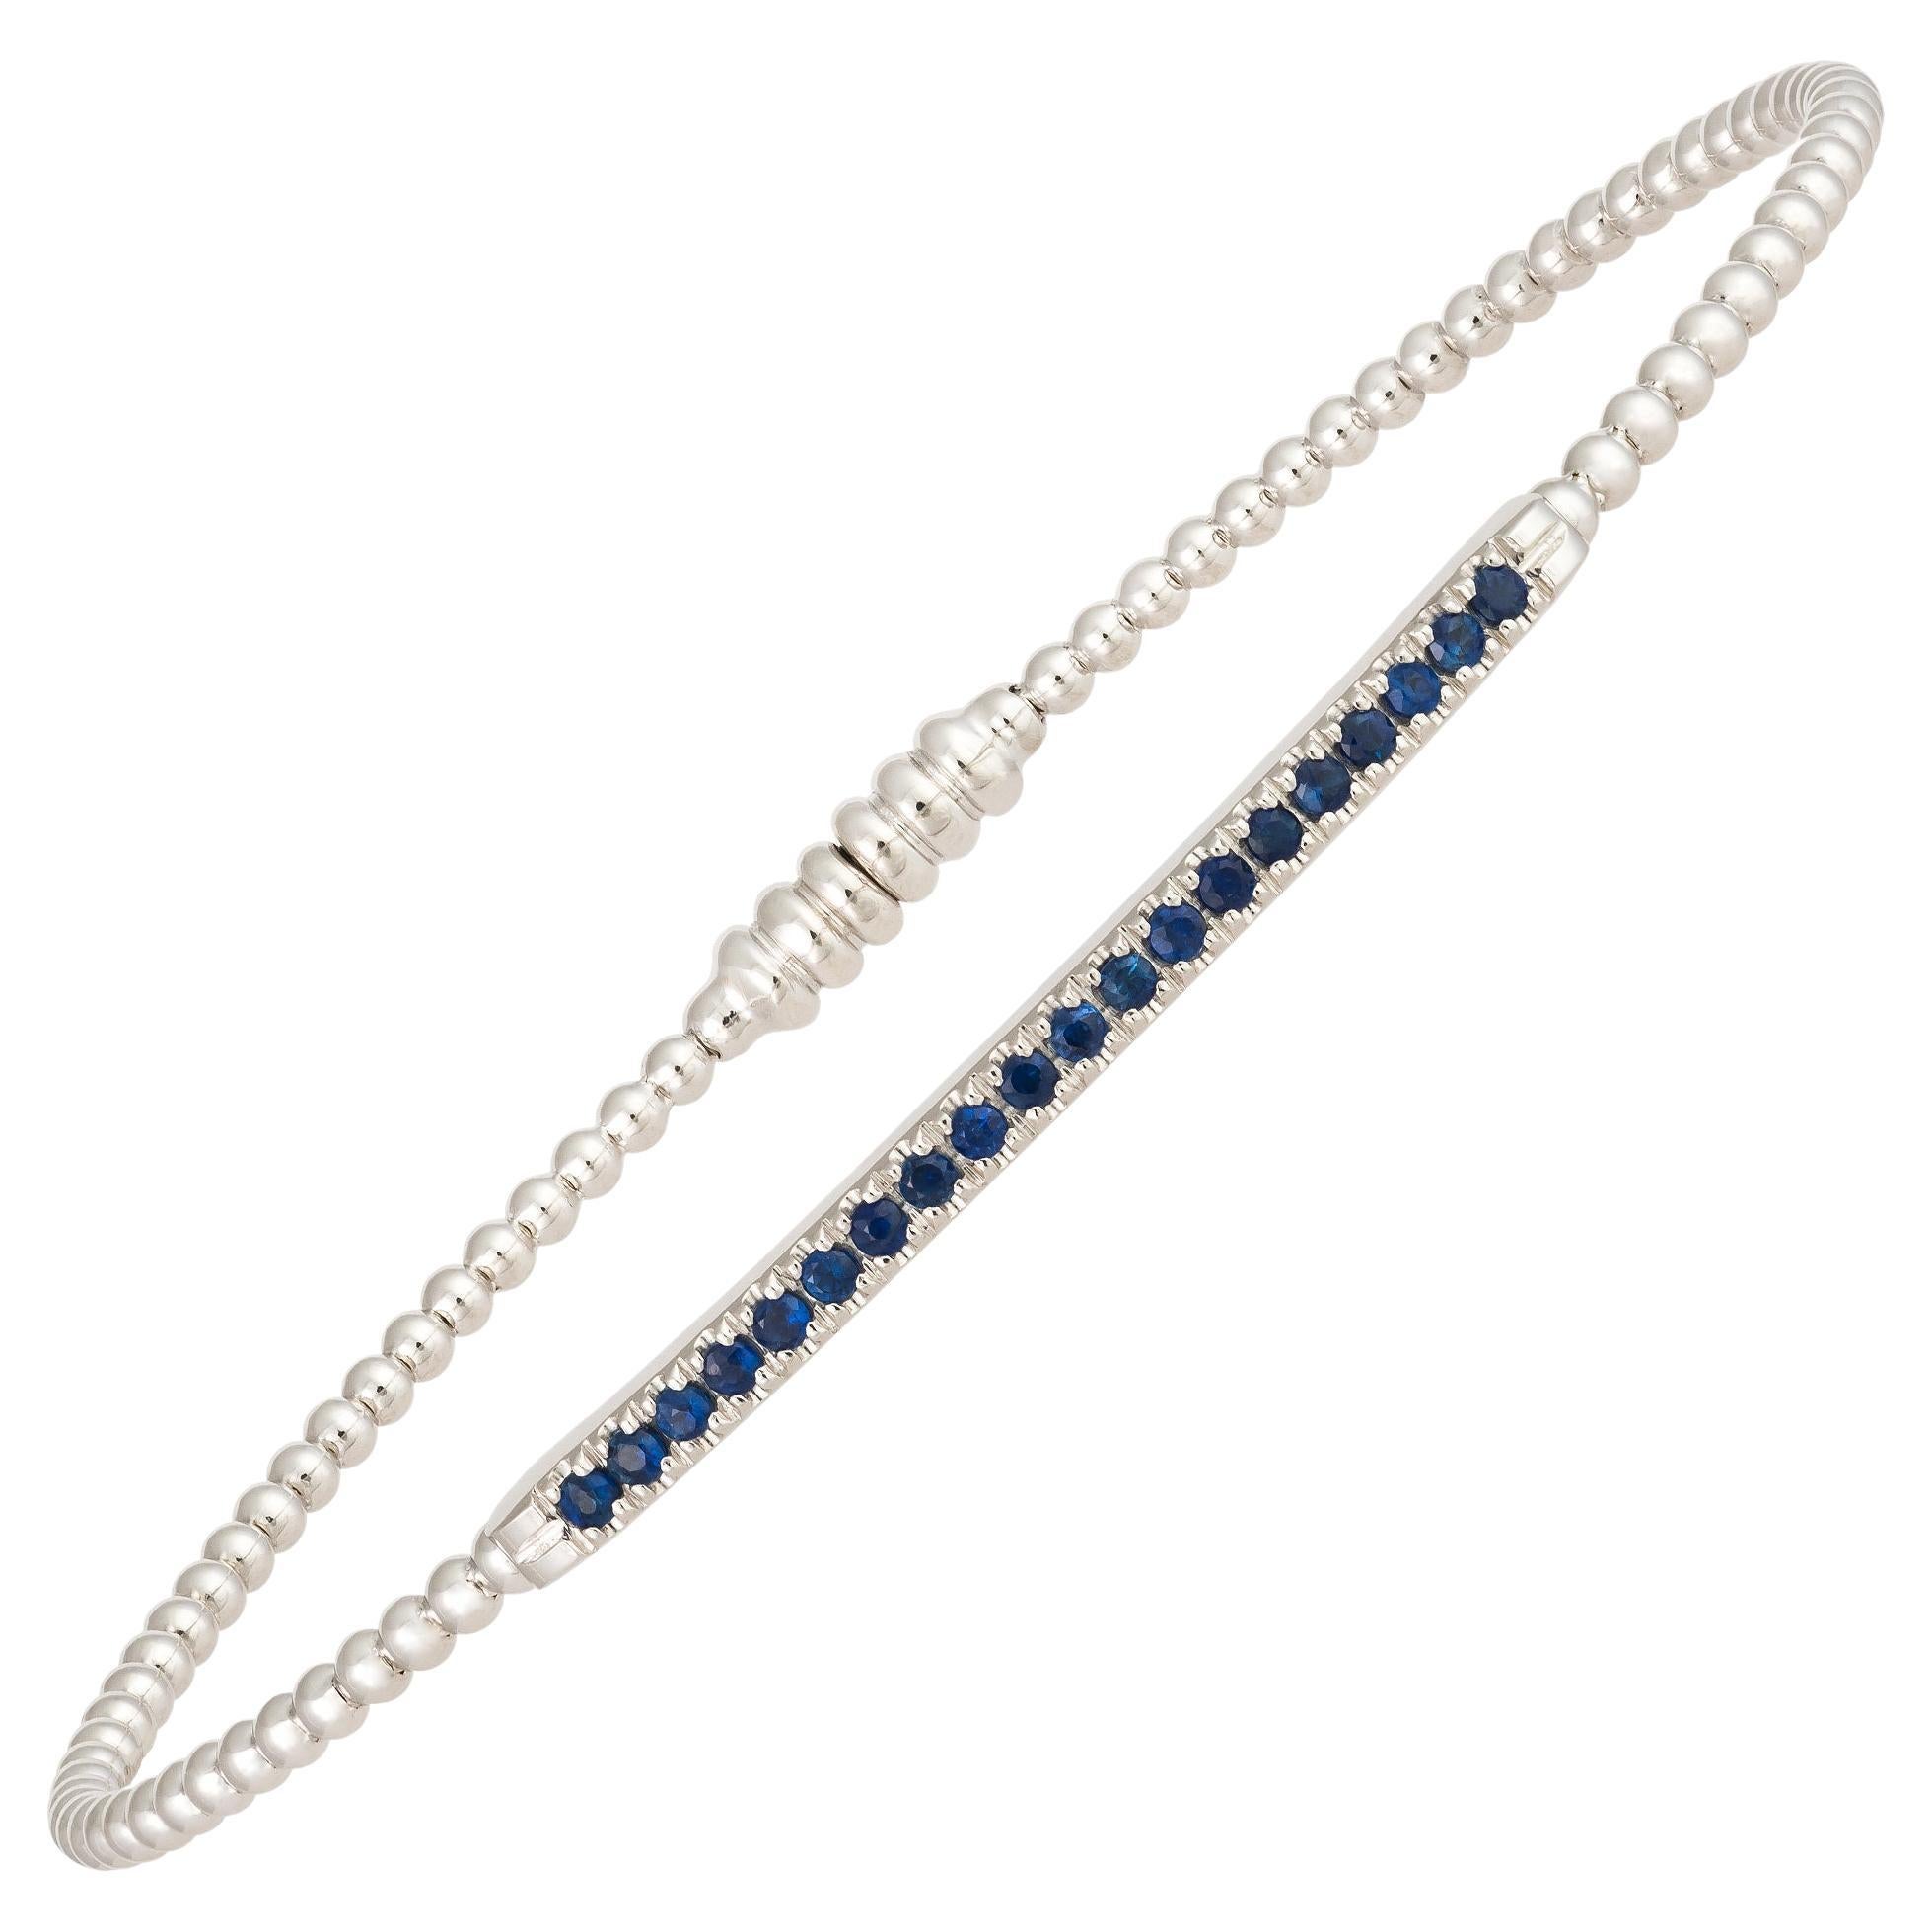 Unique Blue Sapphires Bangle Bracelet White Gold 18K for Her